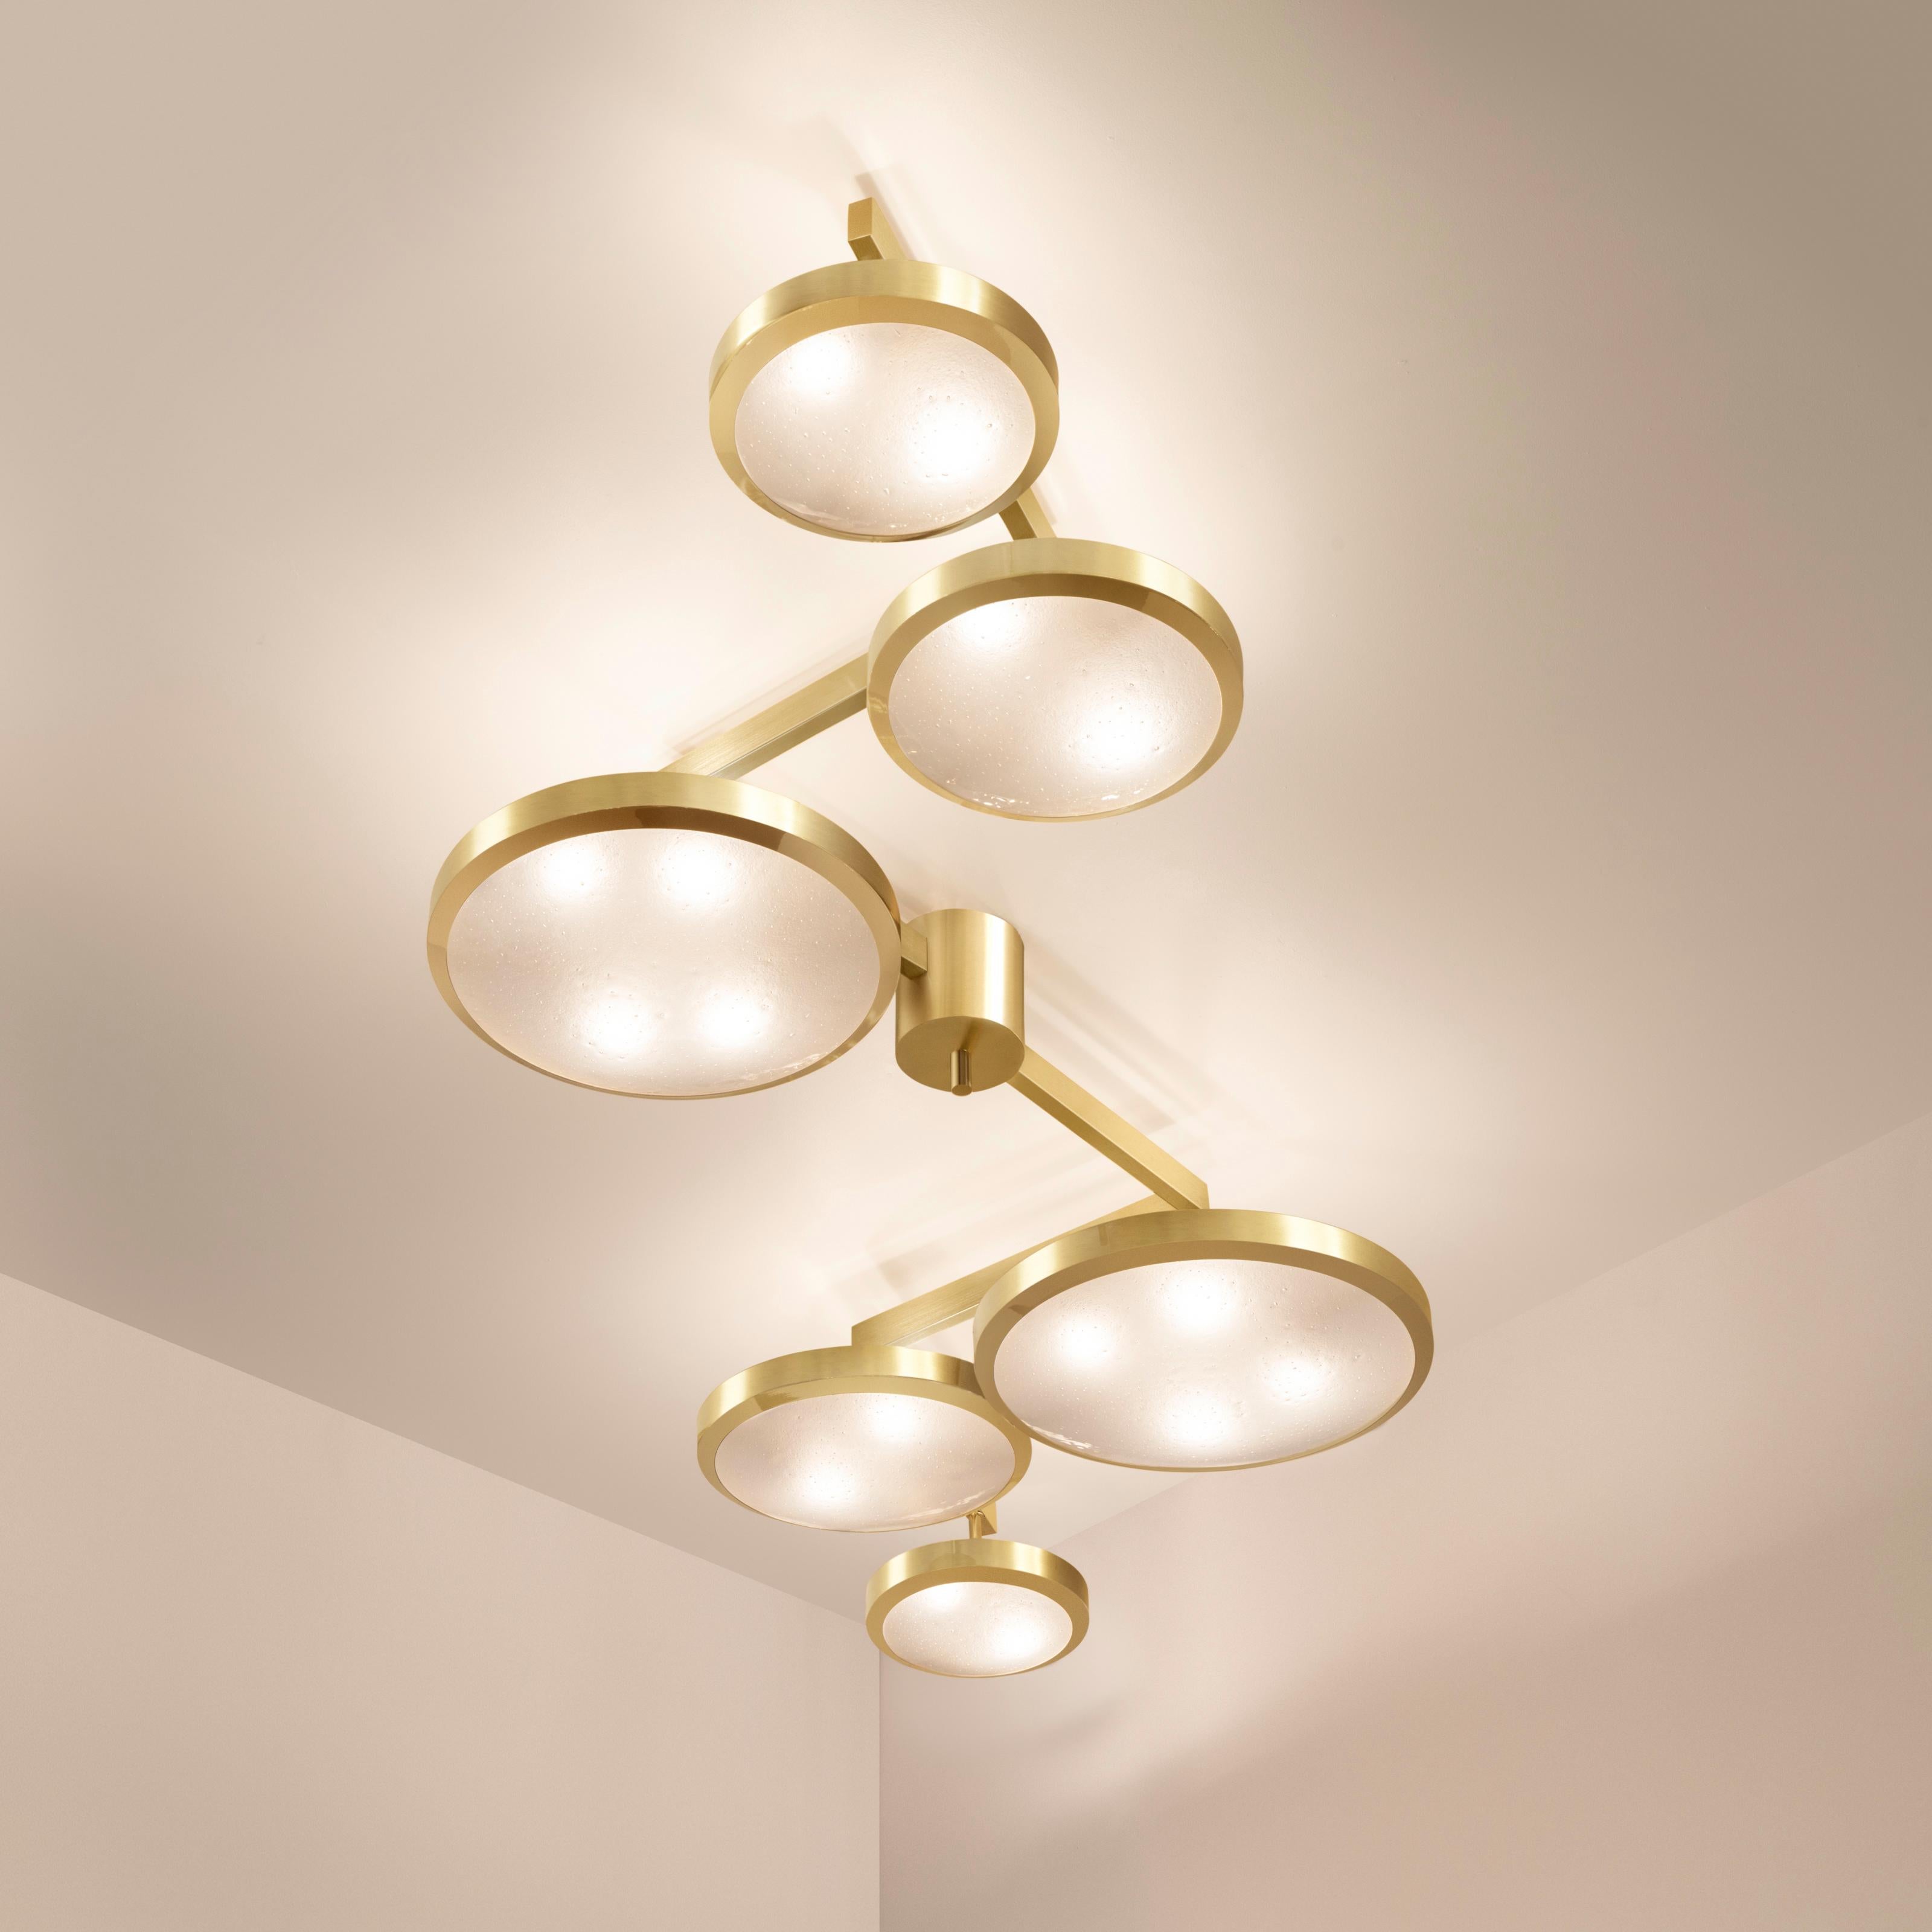 Geometria Sospesa Ceiling Light by Gaspare Asaro - Polished Brass For Sale 3